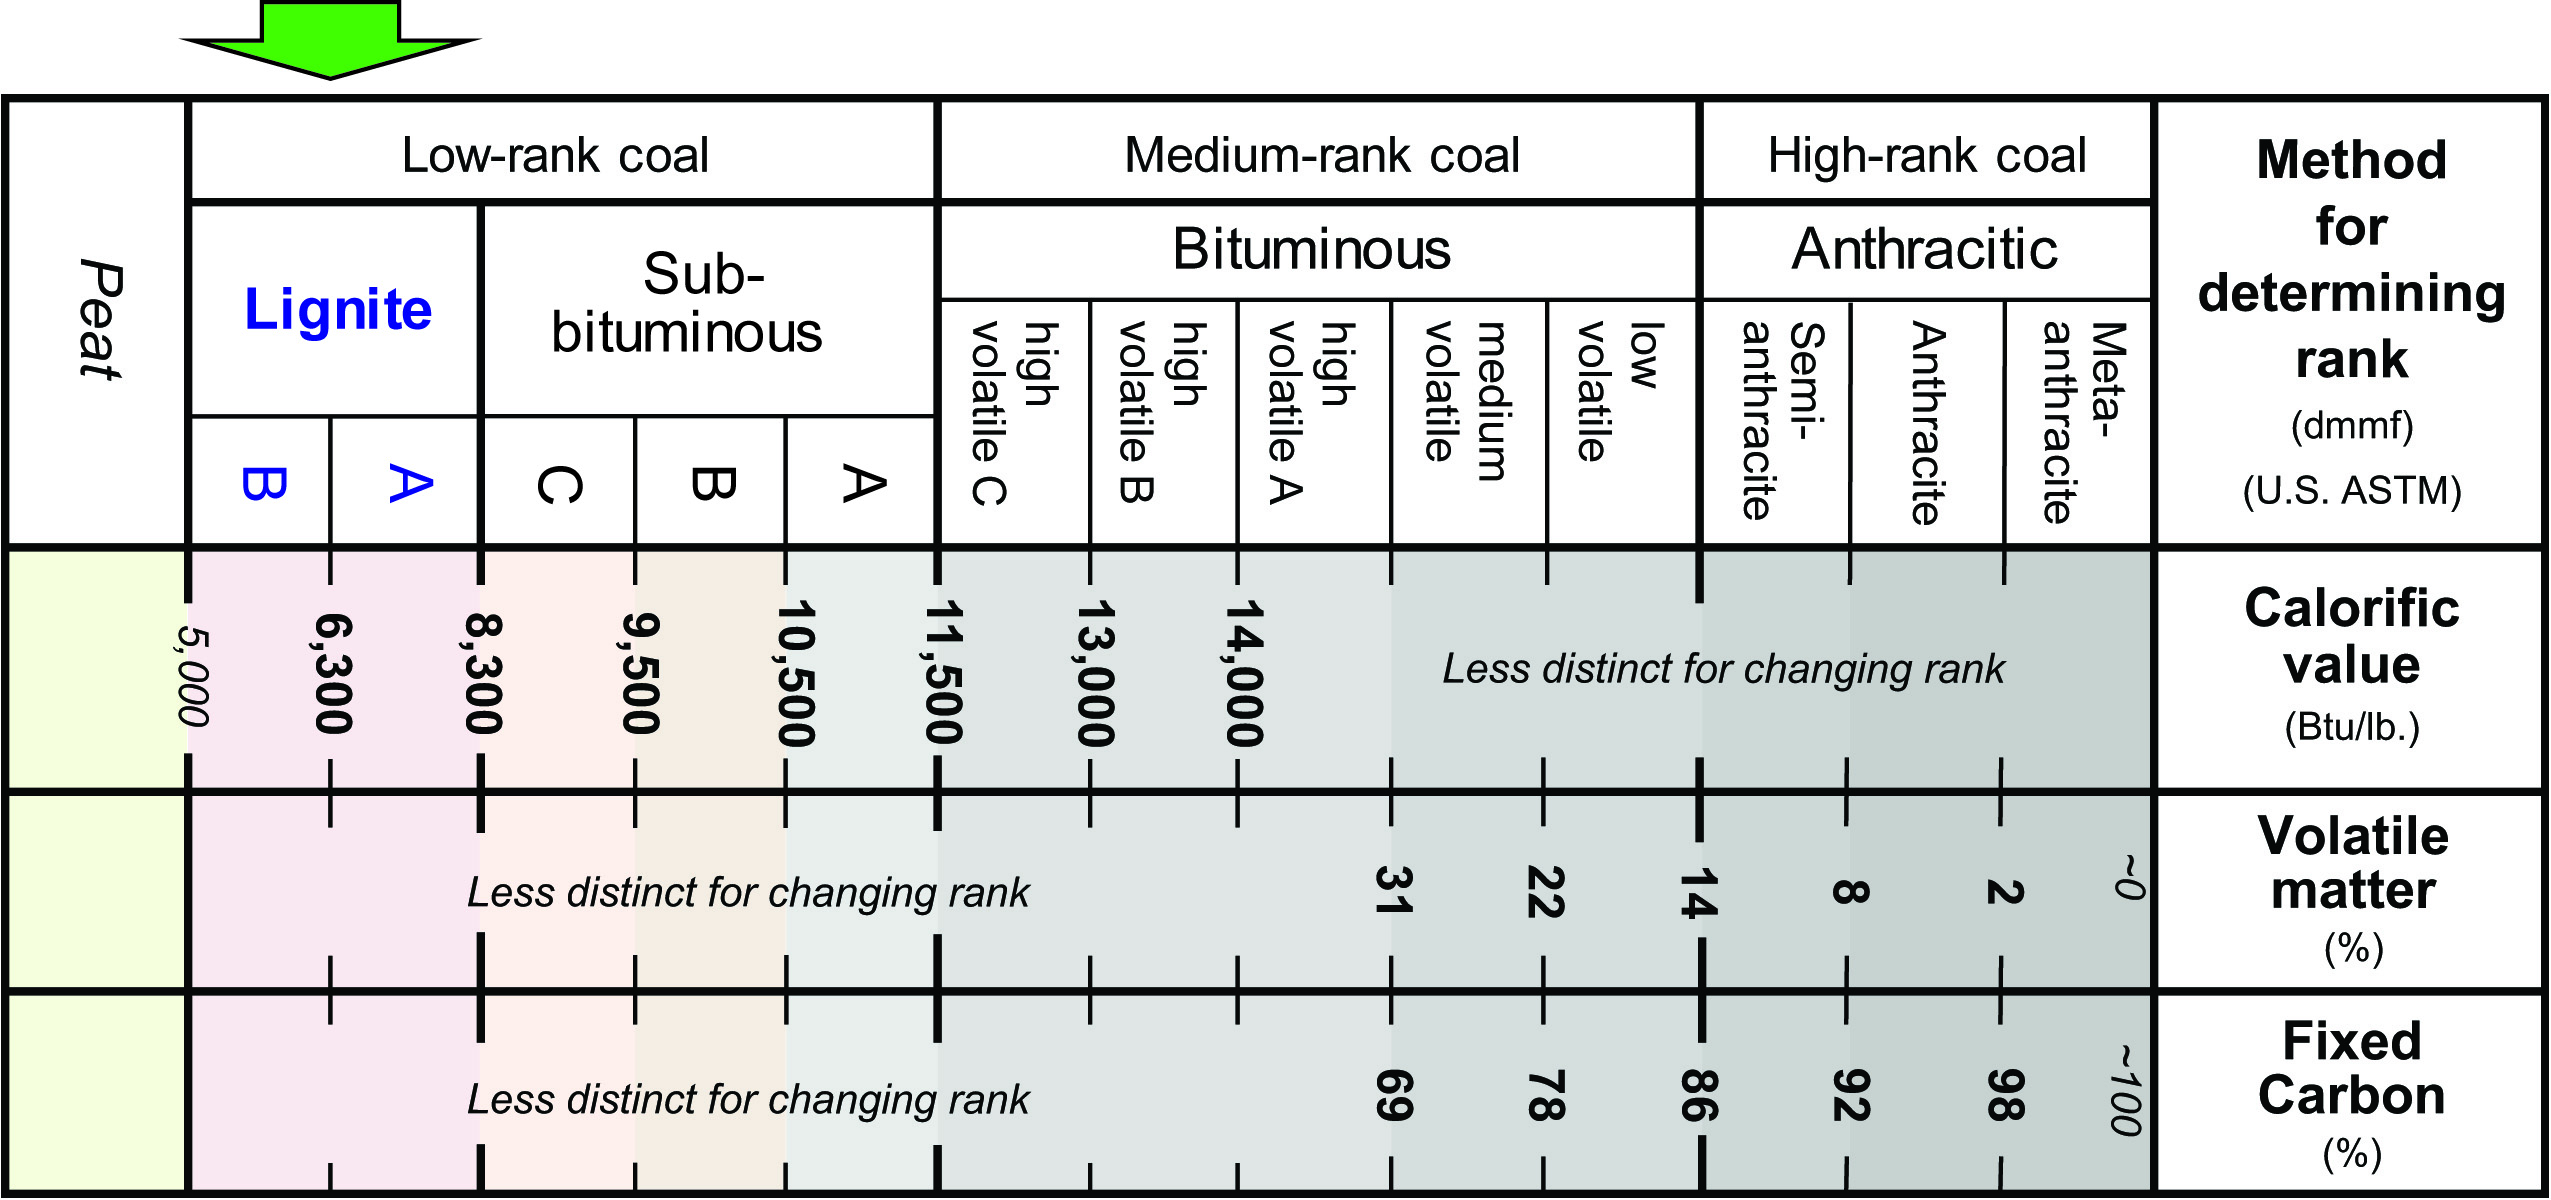 Lignite rank and defining characteristics.